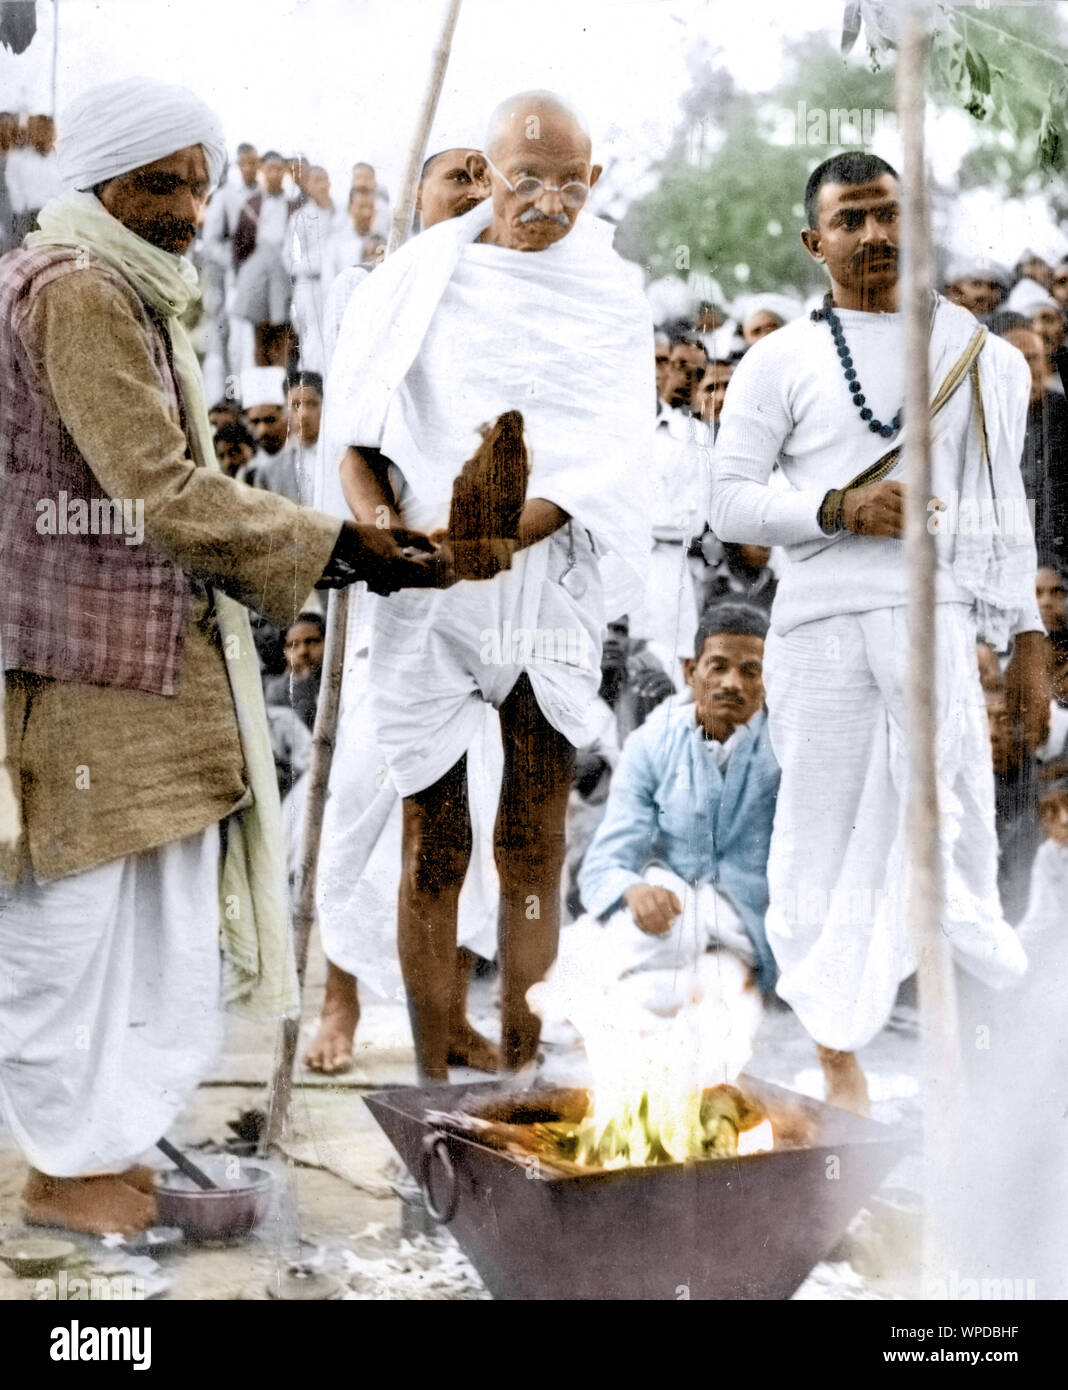 mahatma-gandhi-performing-havan-fire-ceremony-of-laying-stone-allahabad-india-asia-november-19-1939-WPDBHF.jpg